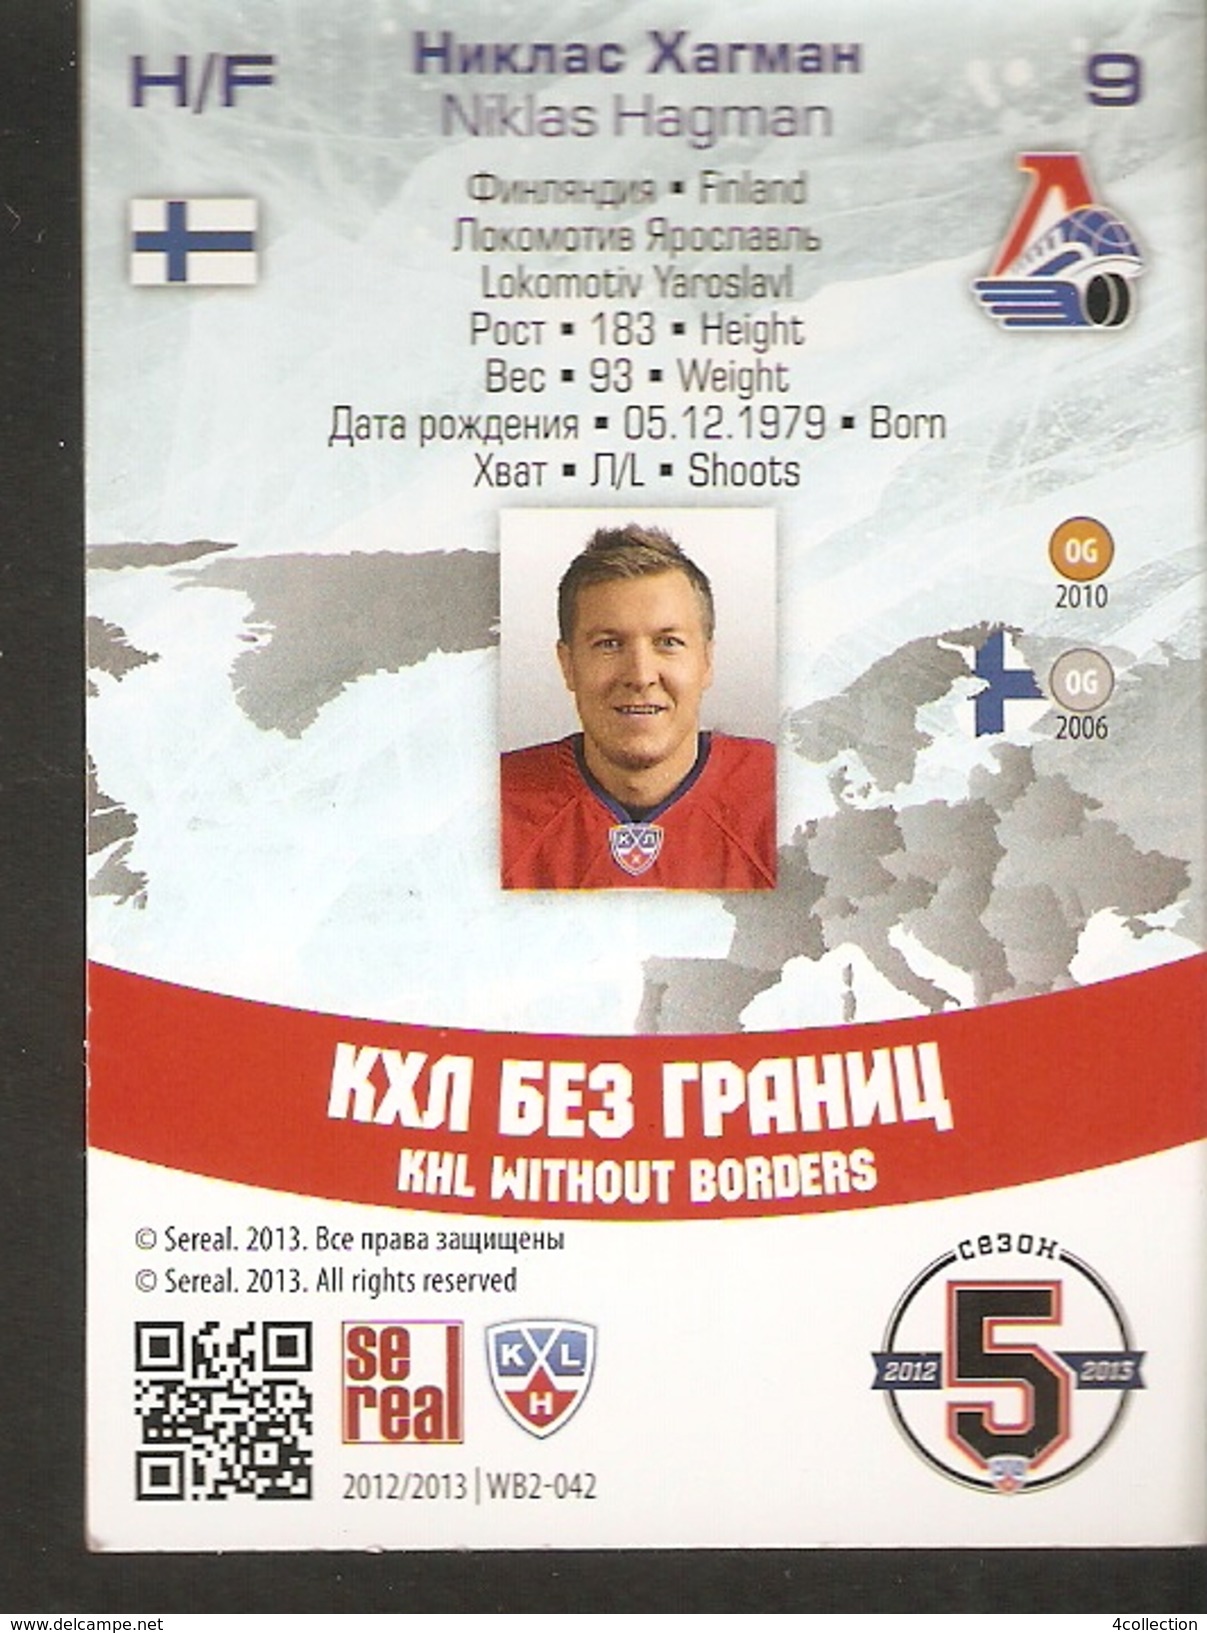 Hockey Sport Collectibles KHL Se Real Card NIKLAS HAGMAN H/F #9 Finland LOKOMOTIV Yaroslavl 5th Season 2012-2013 - 2000-Now